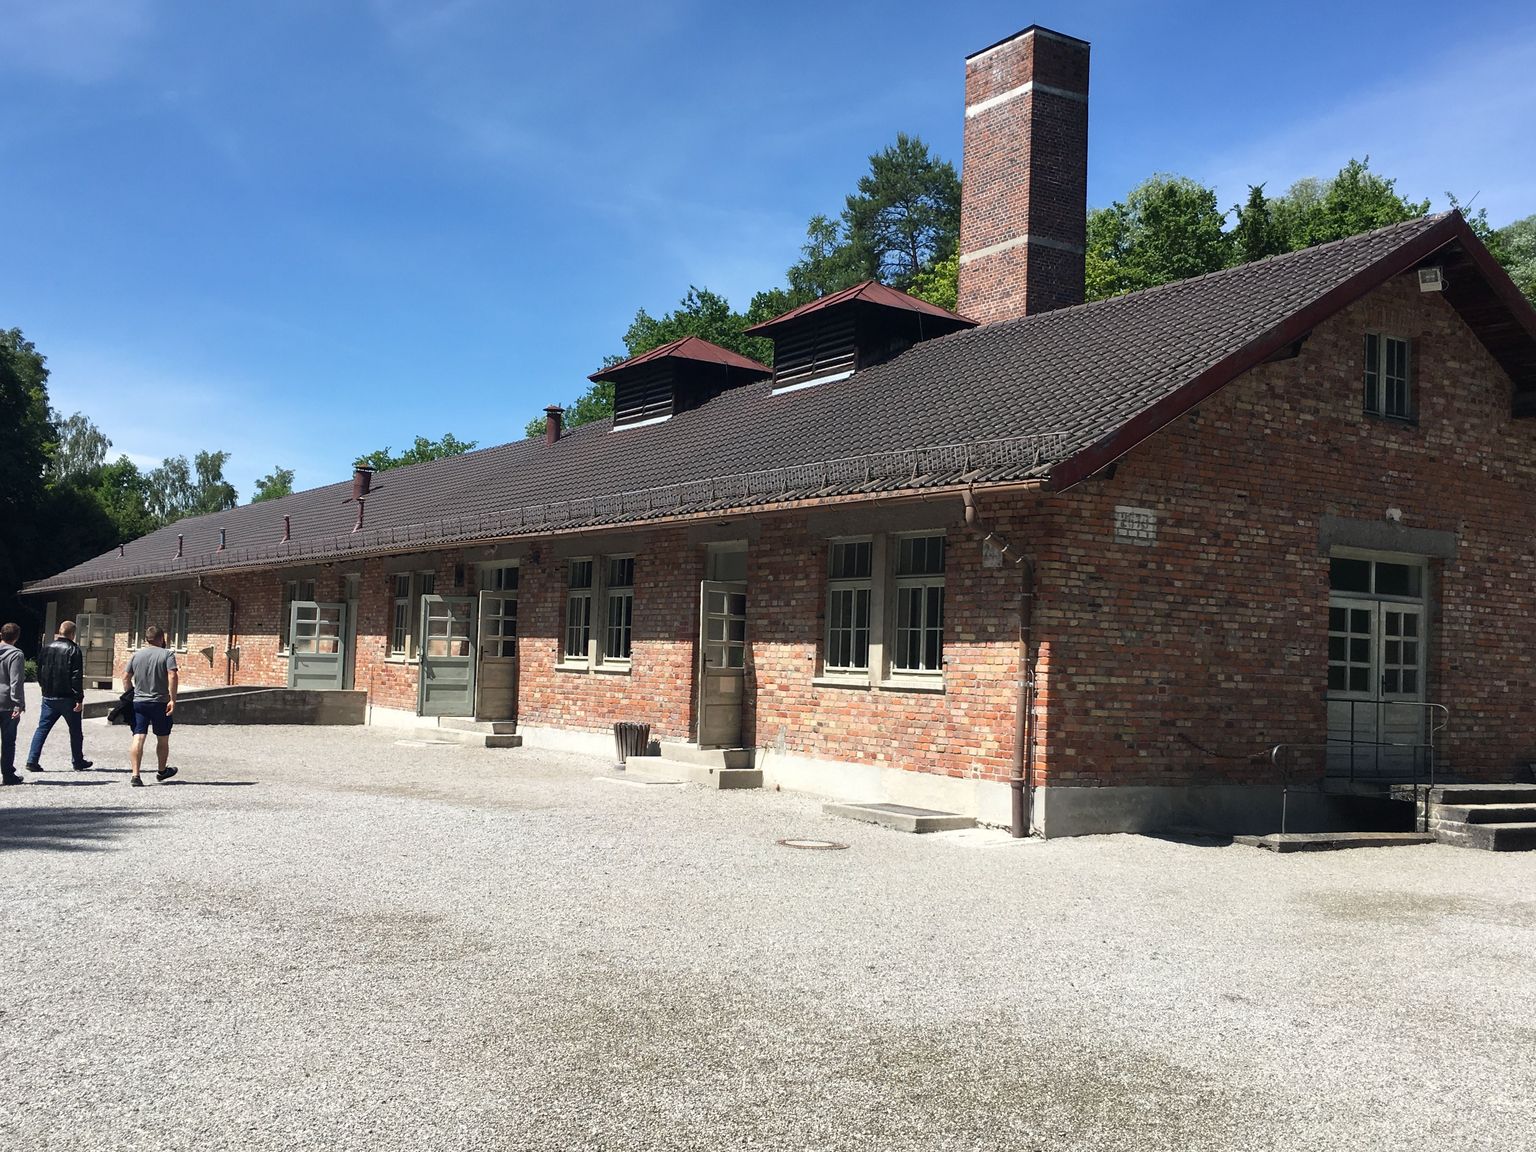 visit the dachau concentration camp memorial site